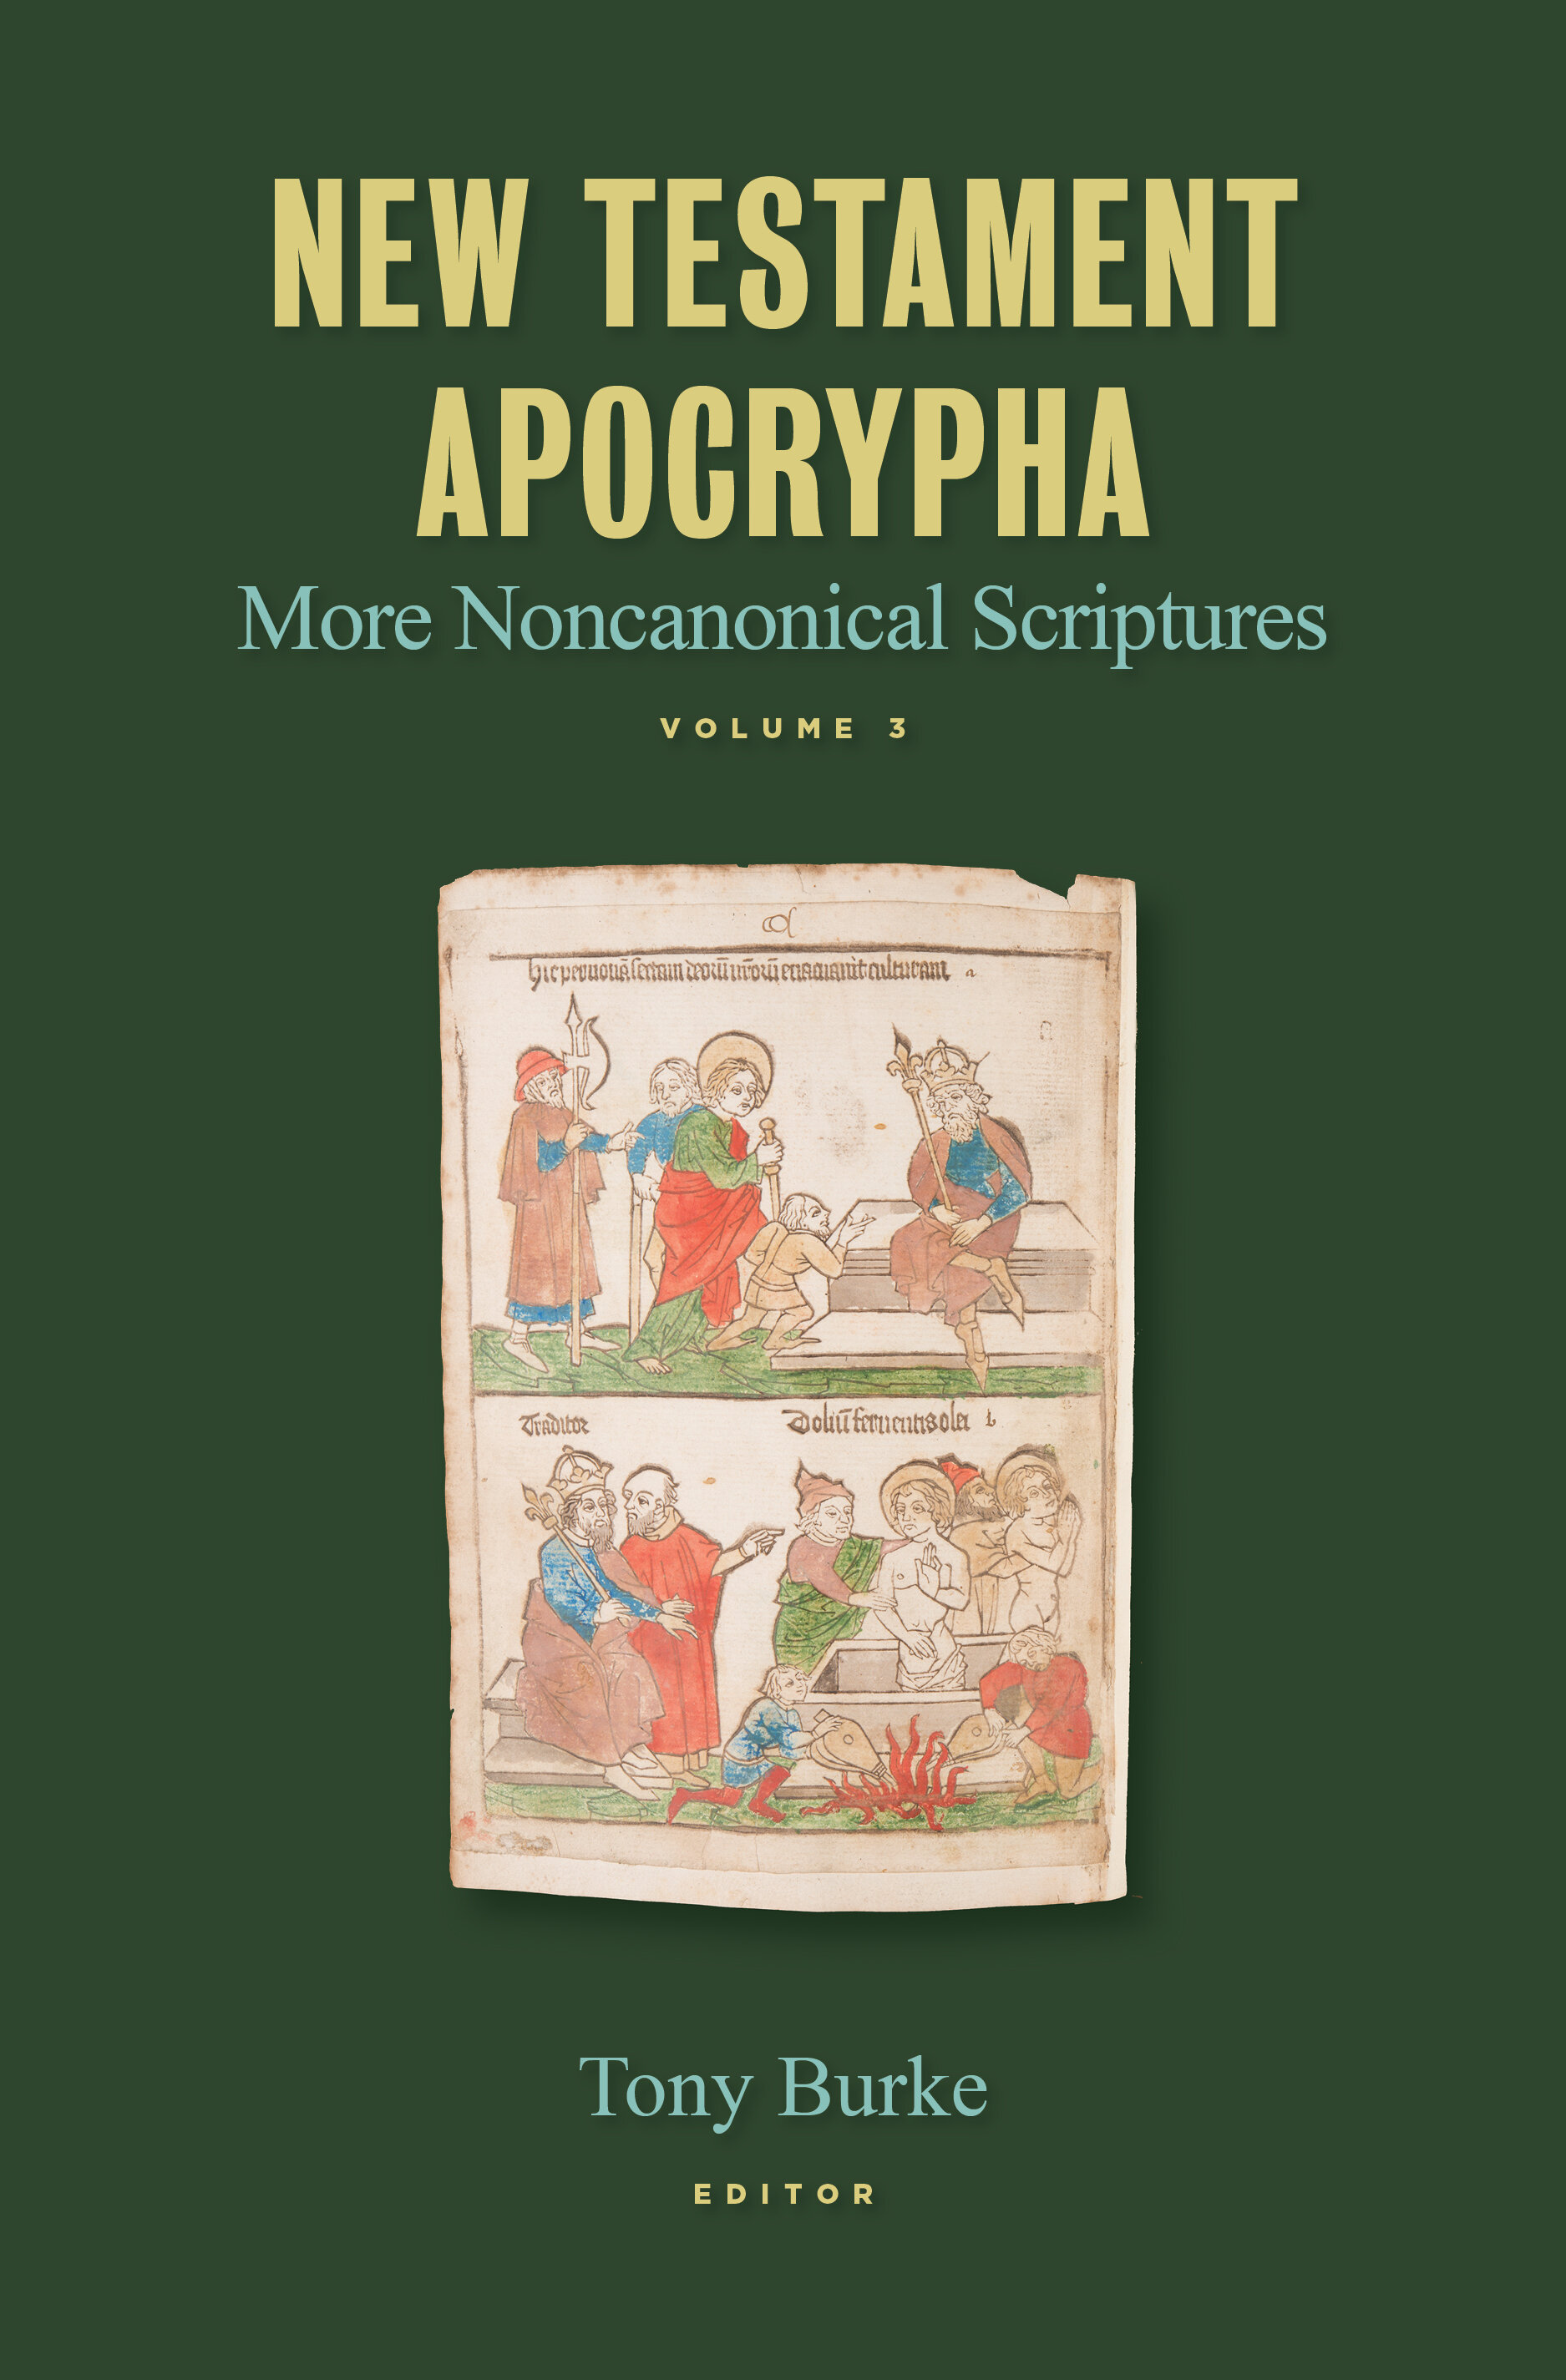 New Testament Apocrypha: More Noncanonical Scriptures, vol. 3